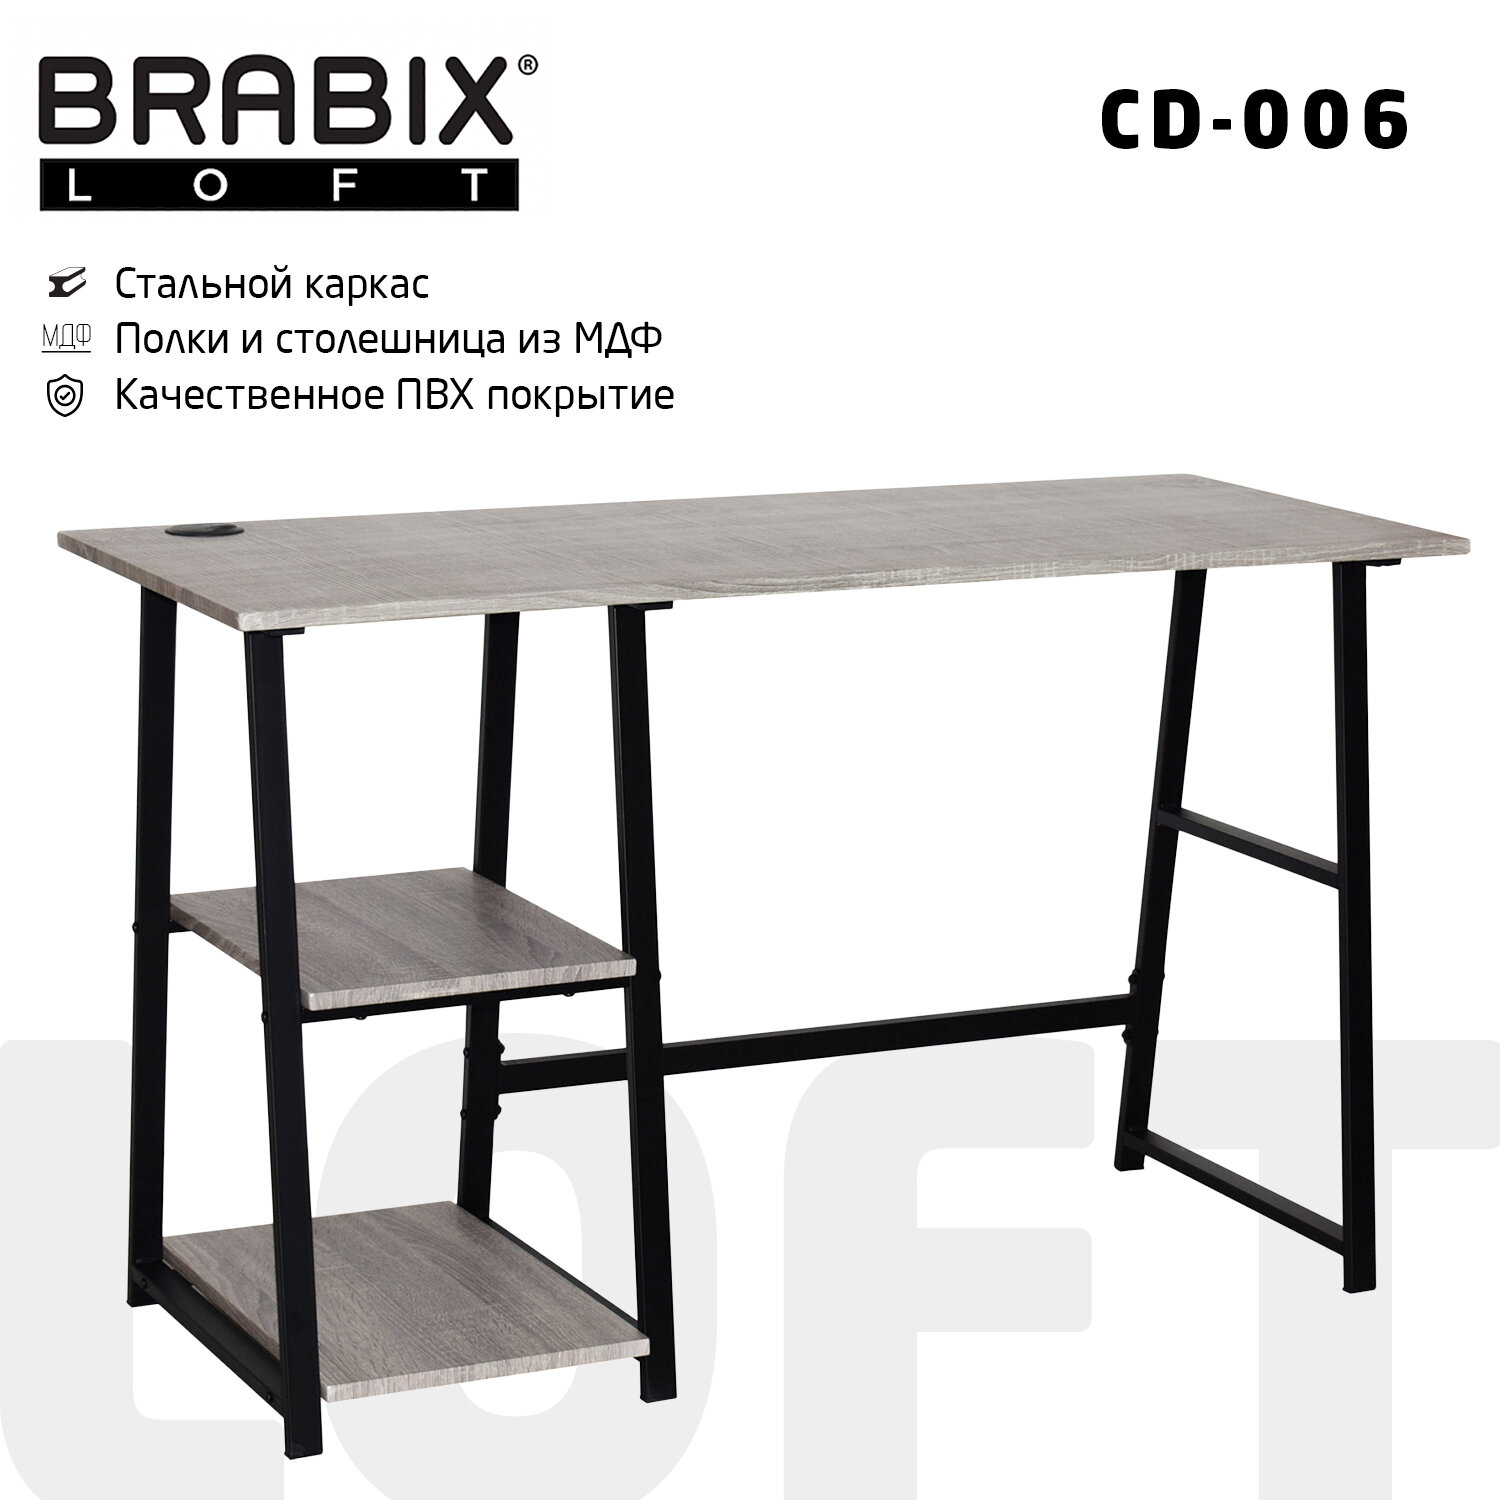 Brabix Стол на металлокаркасе BRABIX LOFT CD-006, 1200х500х730 мм, 2 полки, цвет дуб антик, 641225